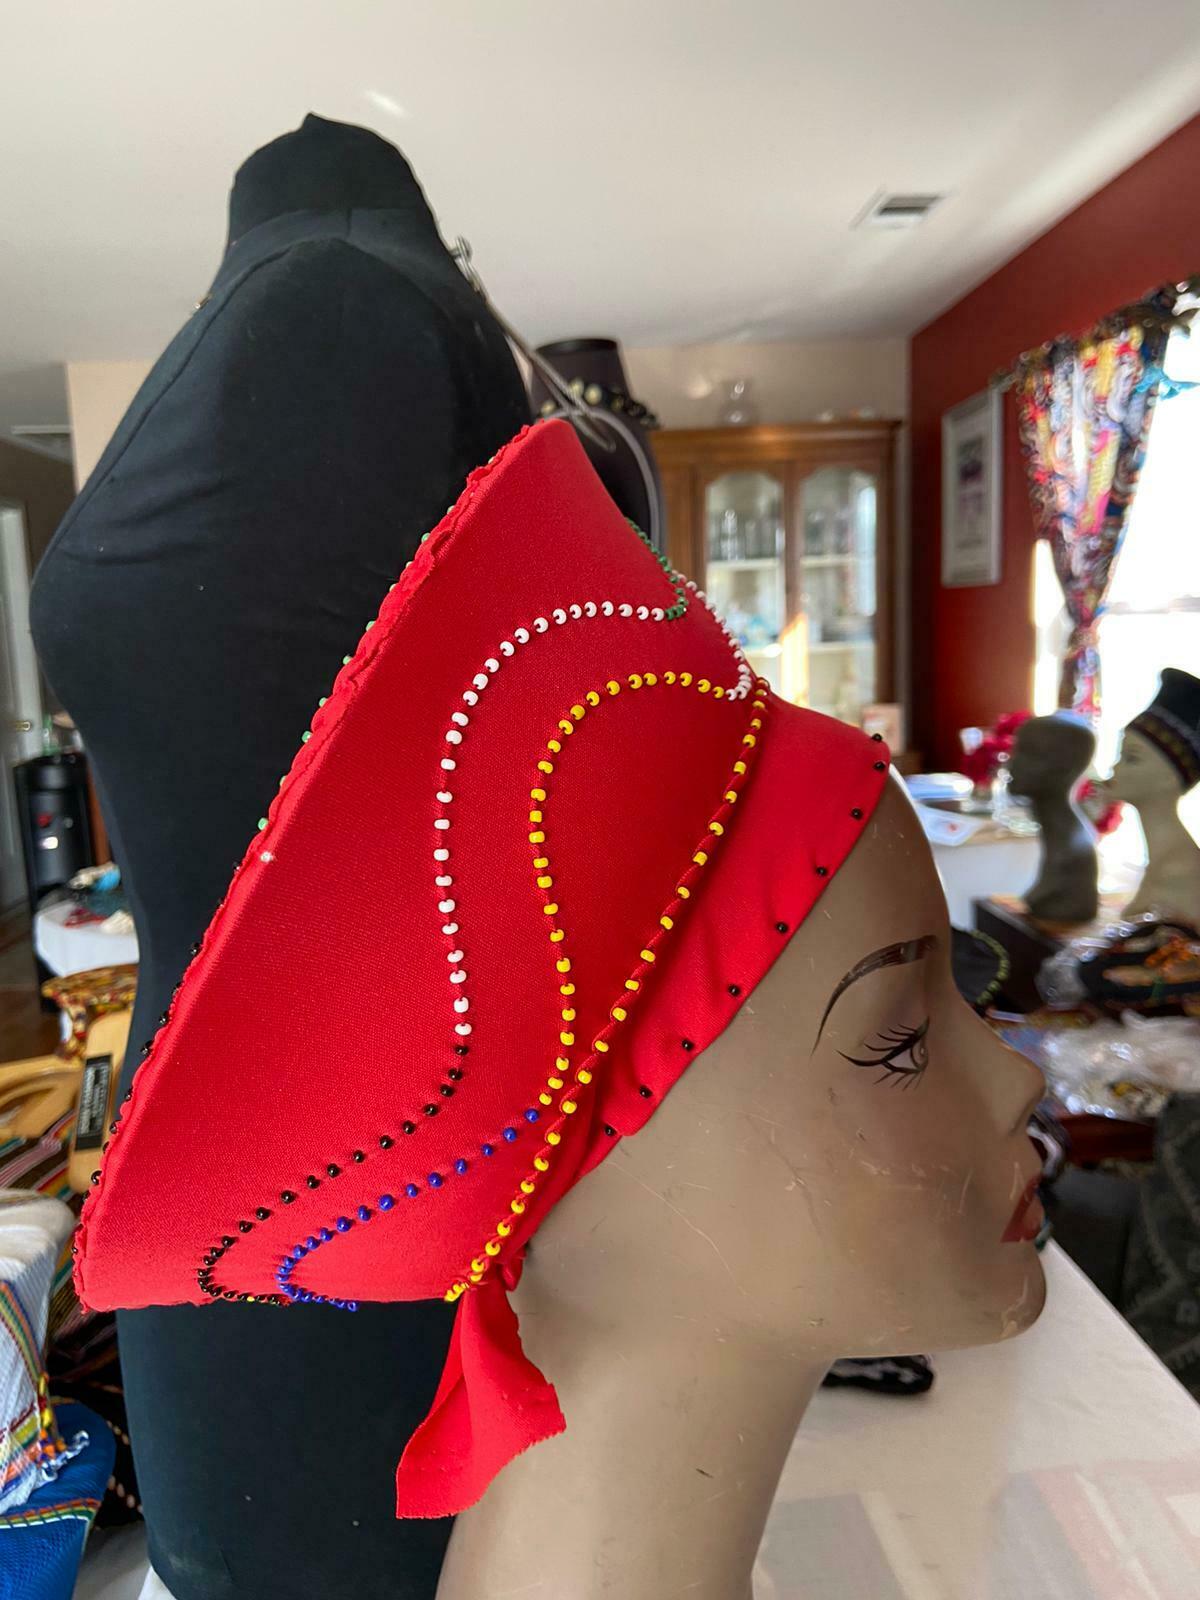 African Art Colorful Zulu Tribal Hats